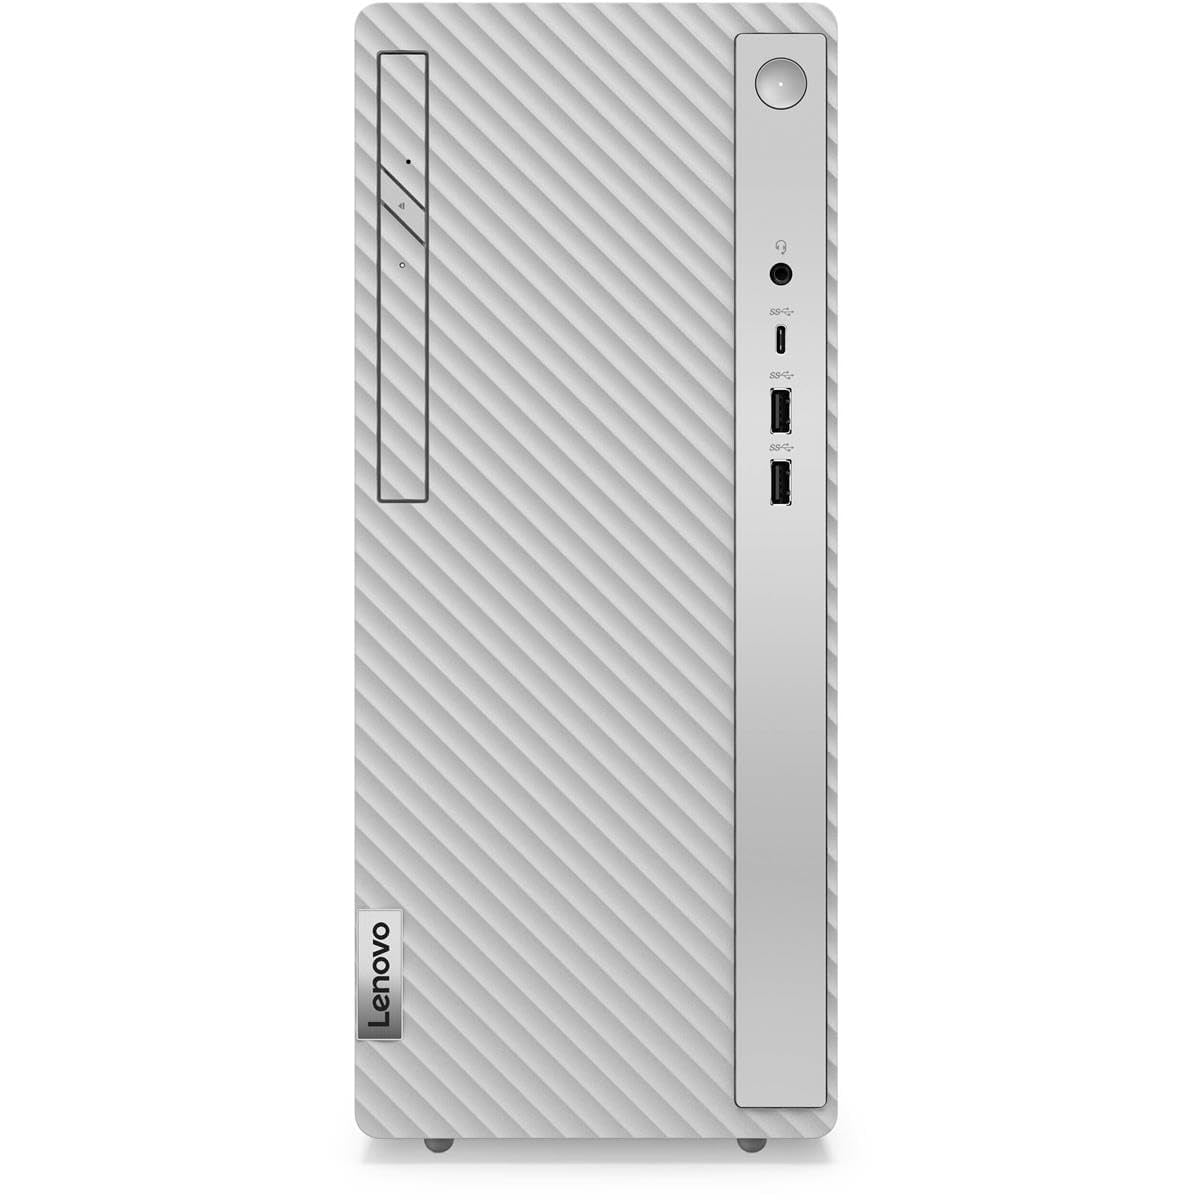 Bon plan : un PC portable gamer Lenovo Core i5 à seulement 849 euros